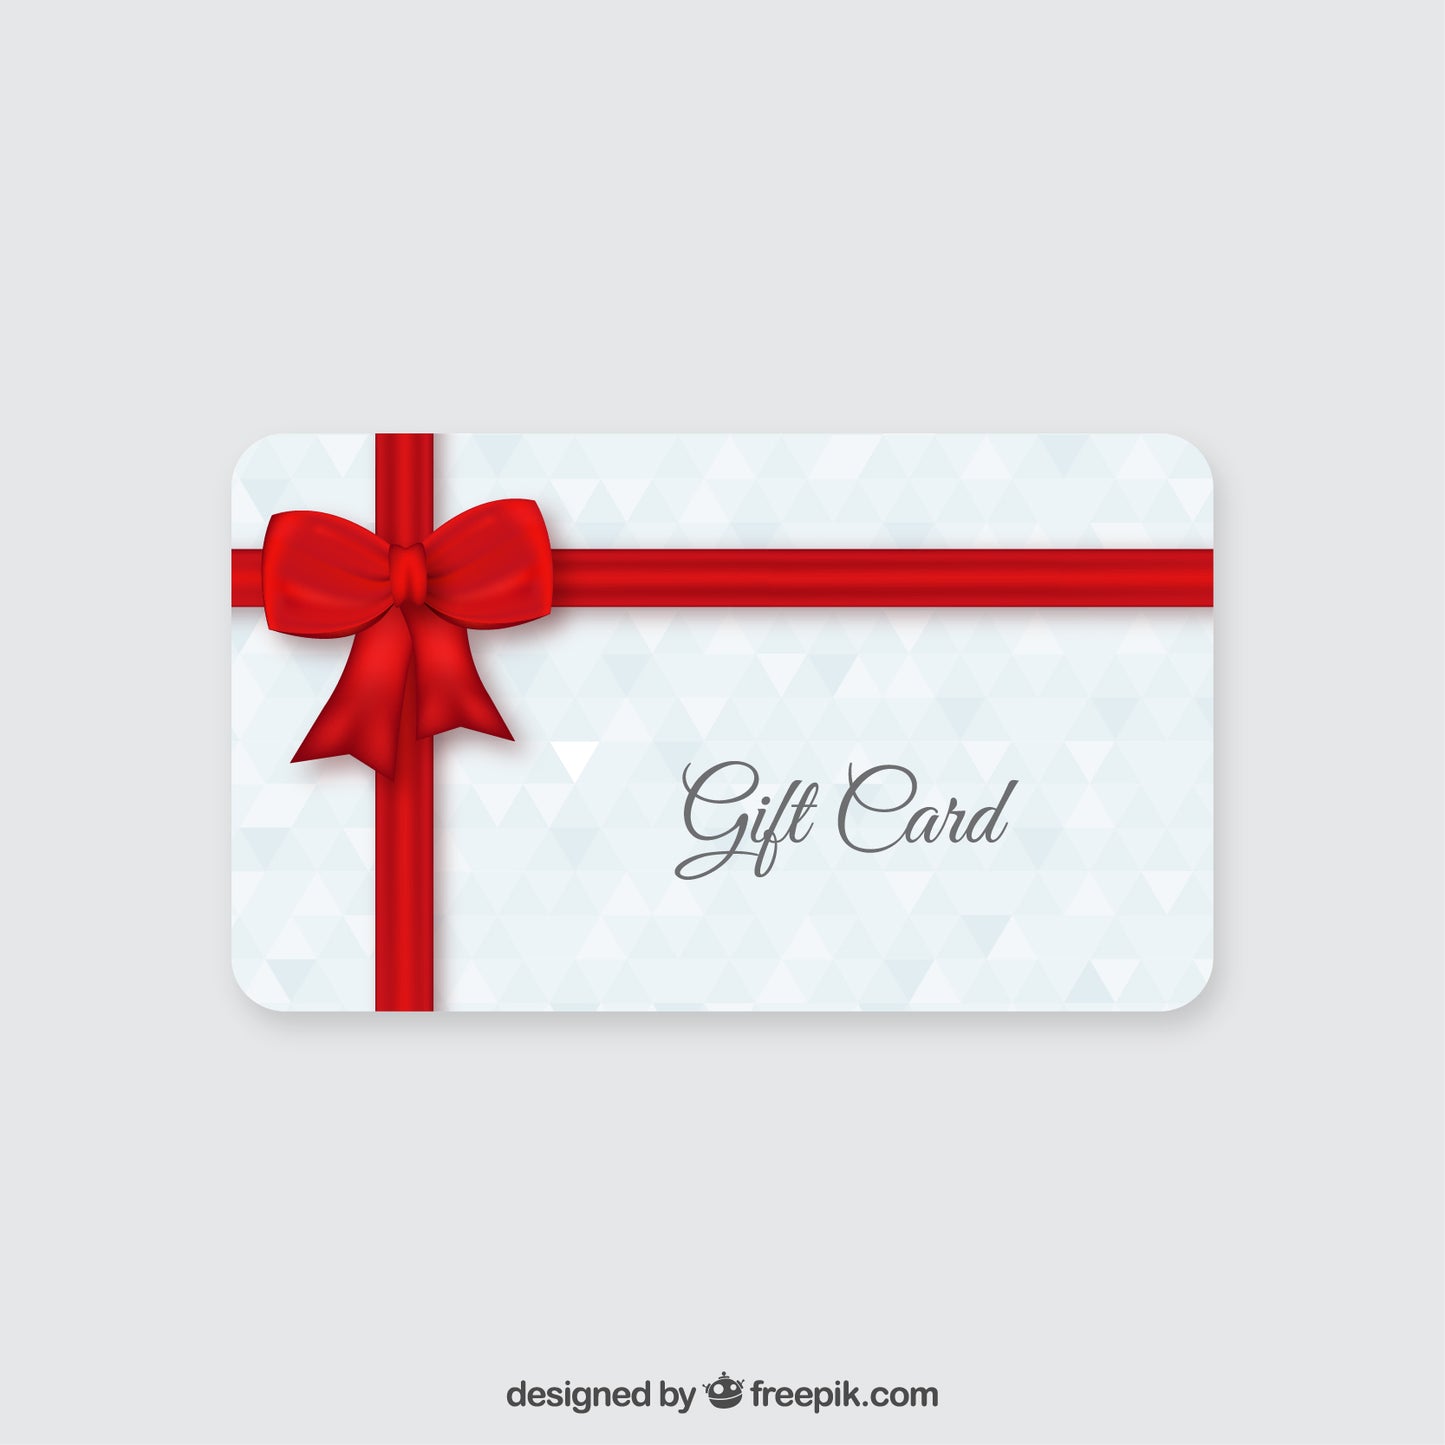 PetKrush Gift Card